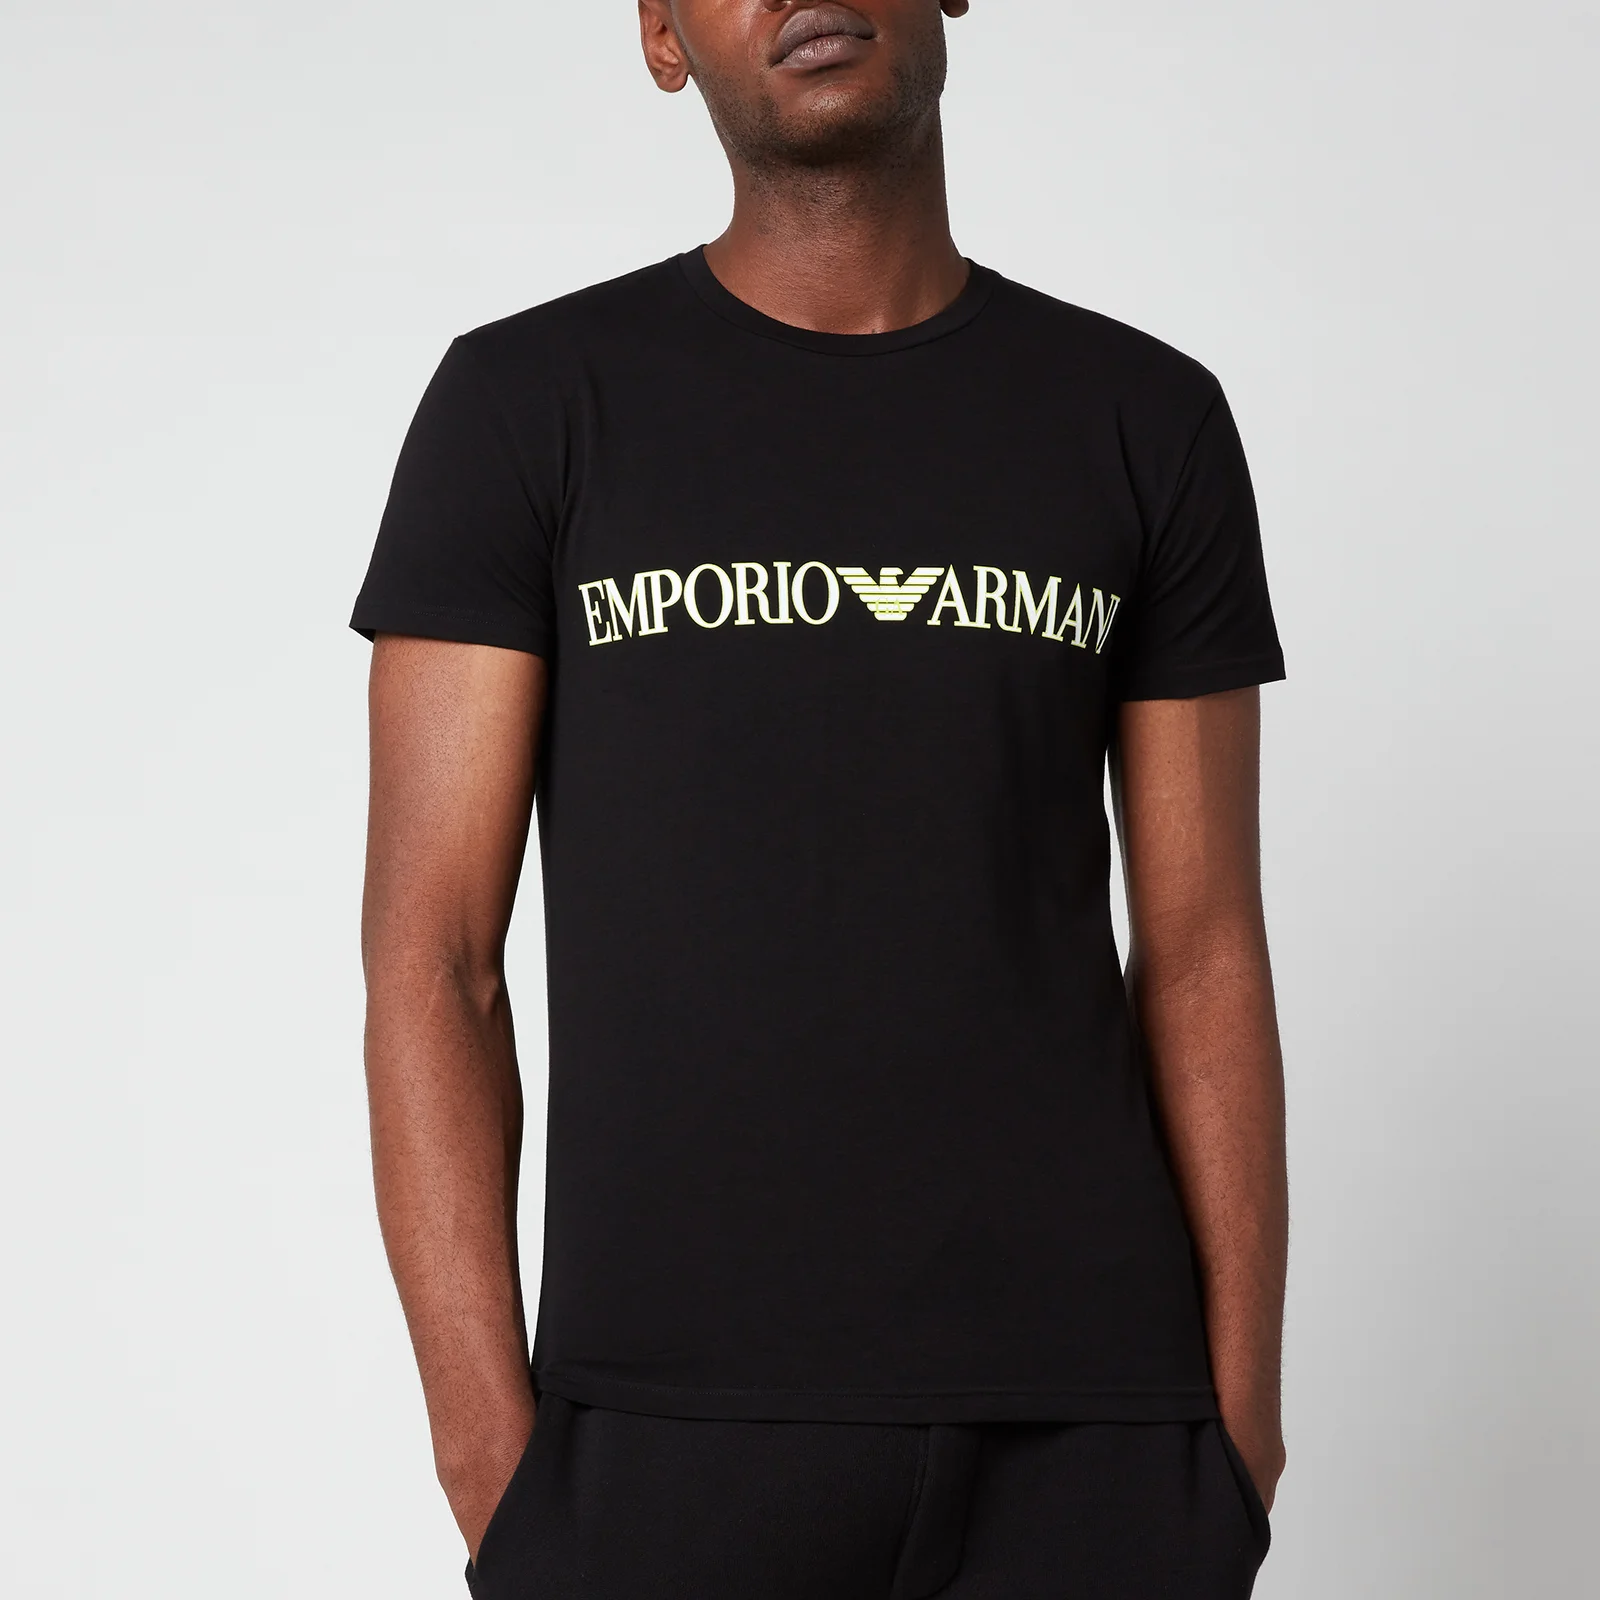 Emporio Armani Men's Megalogo Crew Neck T-Shirt - Black Image 1